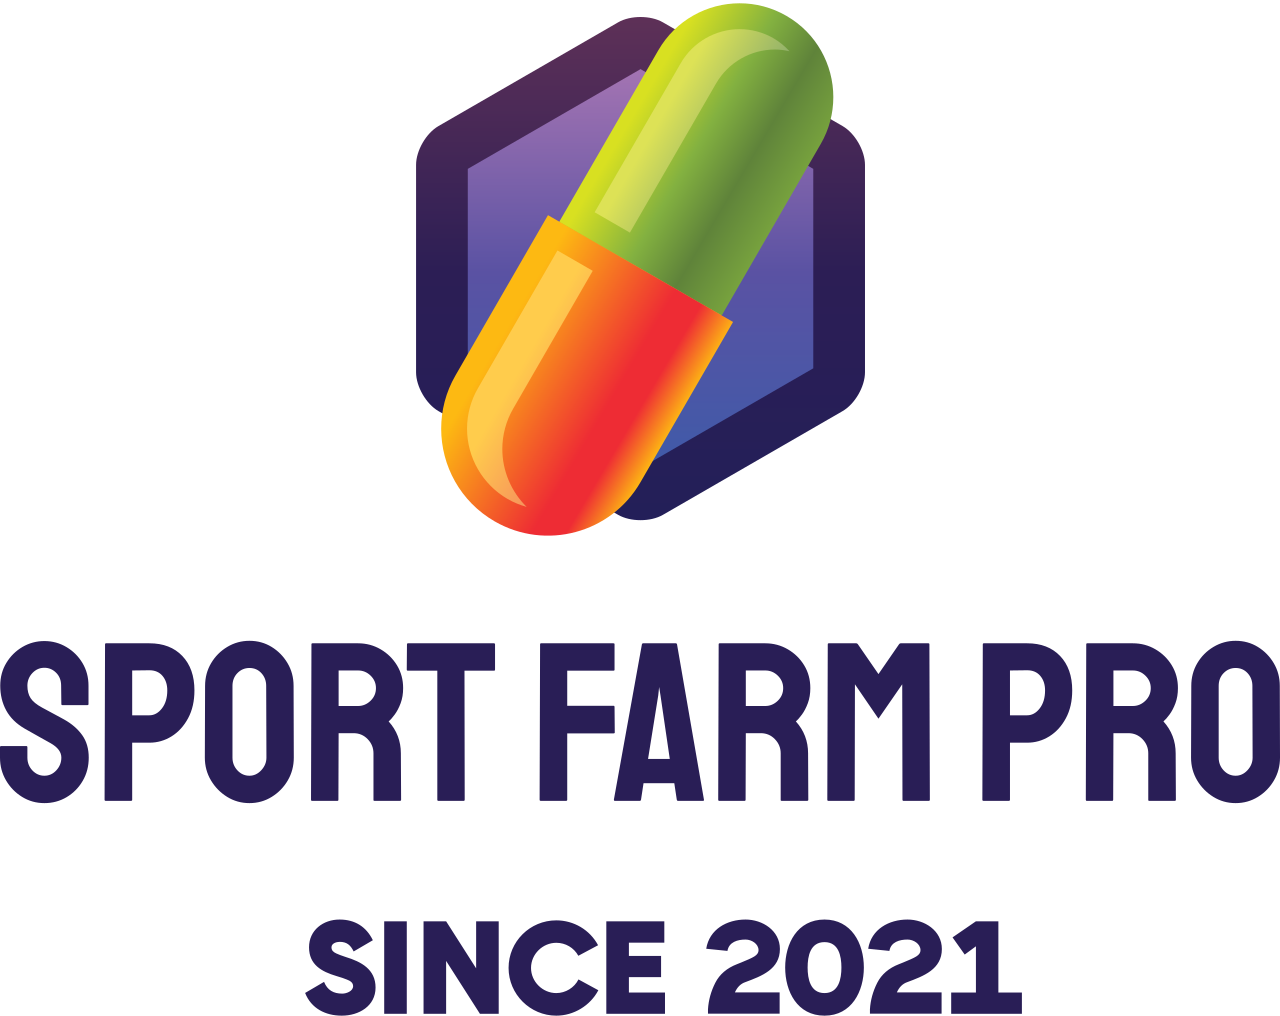 Sport Farm Pro's logo